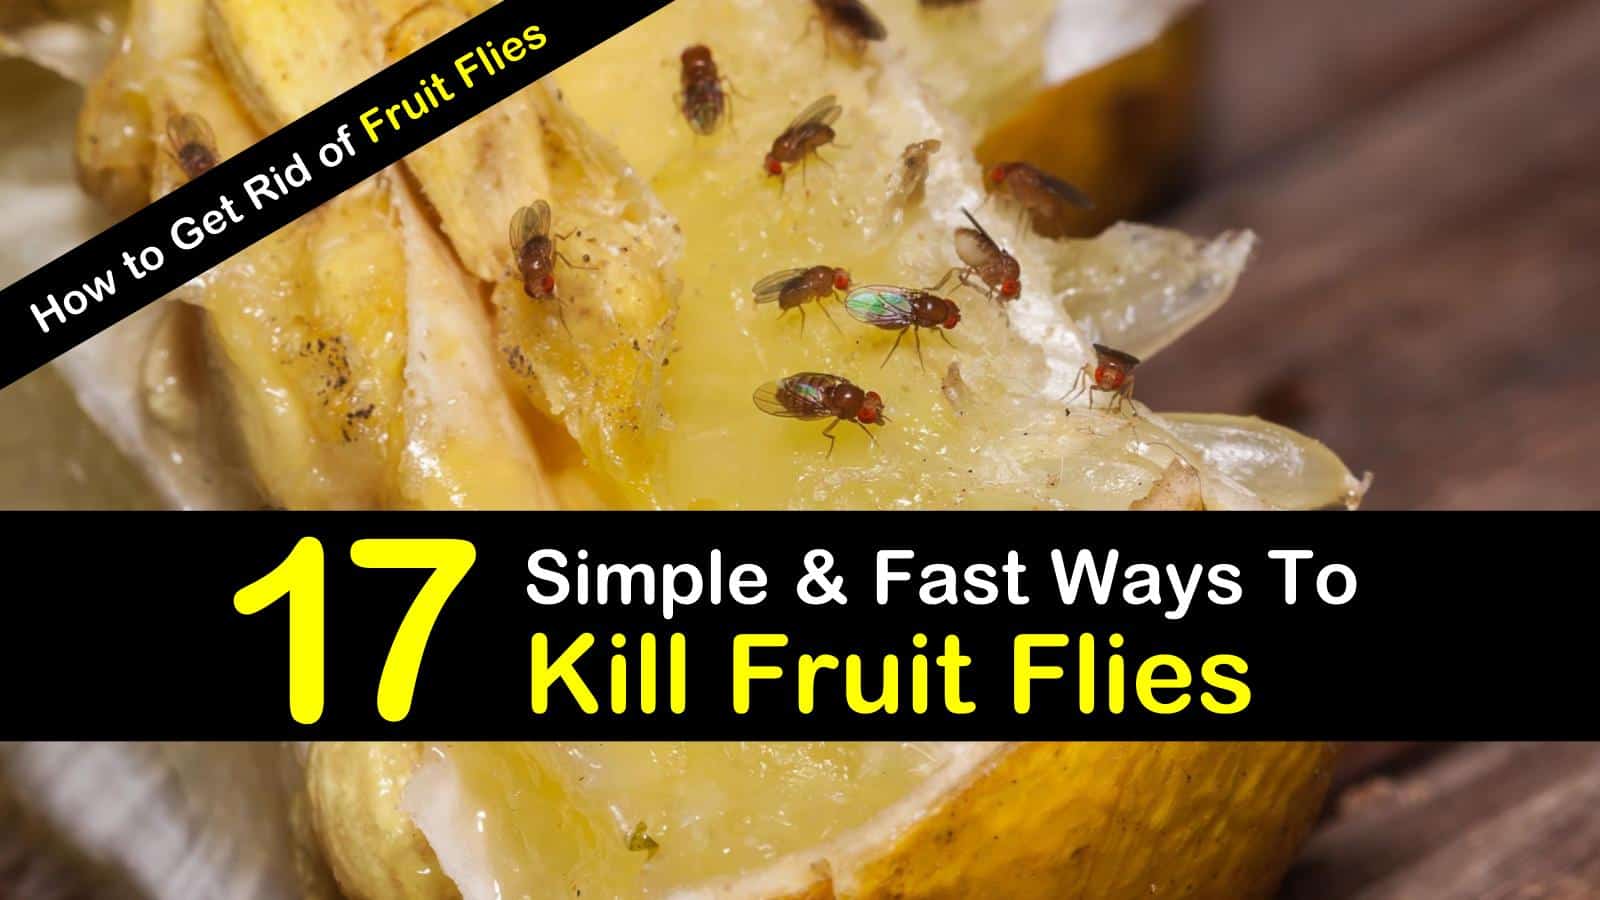 https://www.tipsbulletin.com/wp-content/uploads/2017/08/how-to-get-rid-of-fruit-flies-t1.jpg